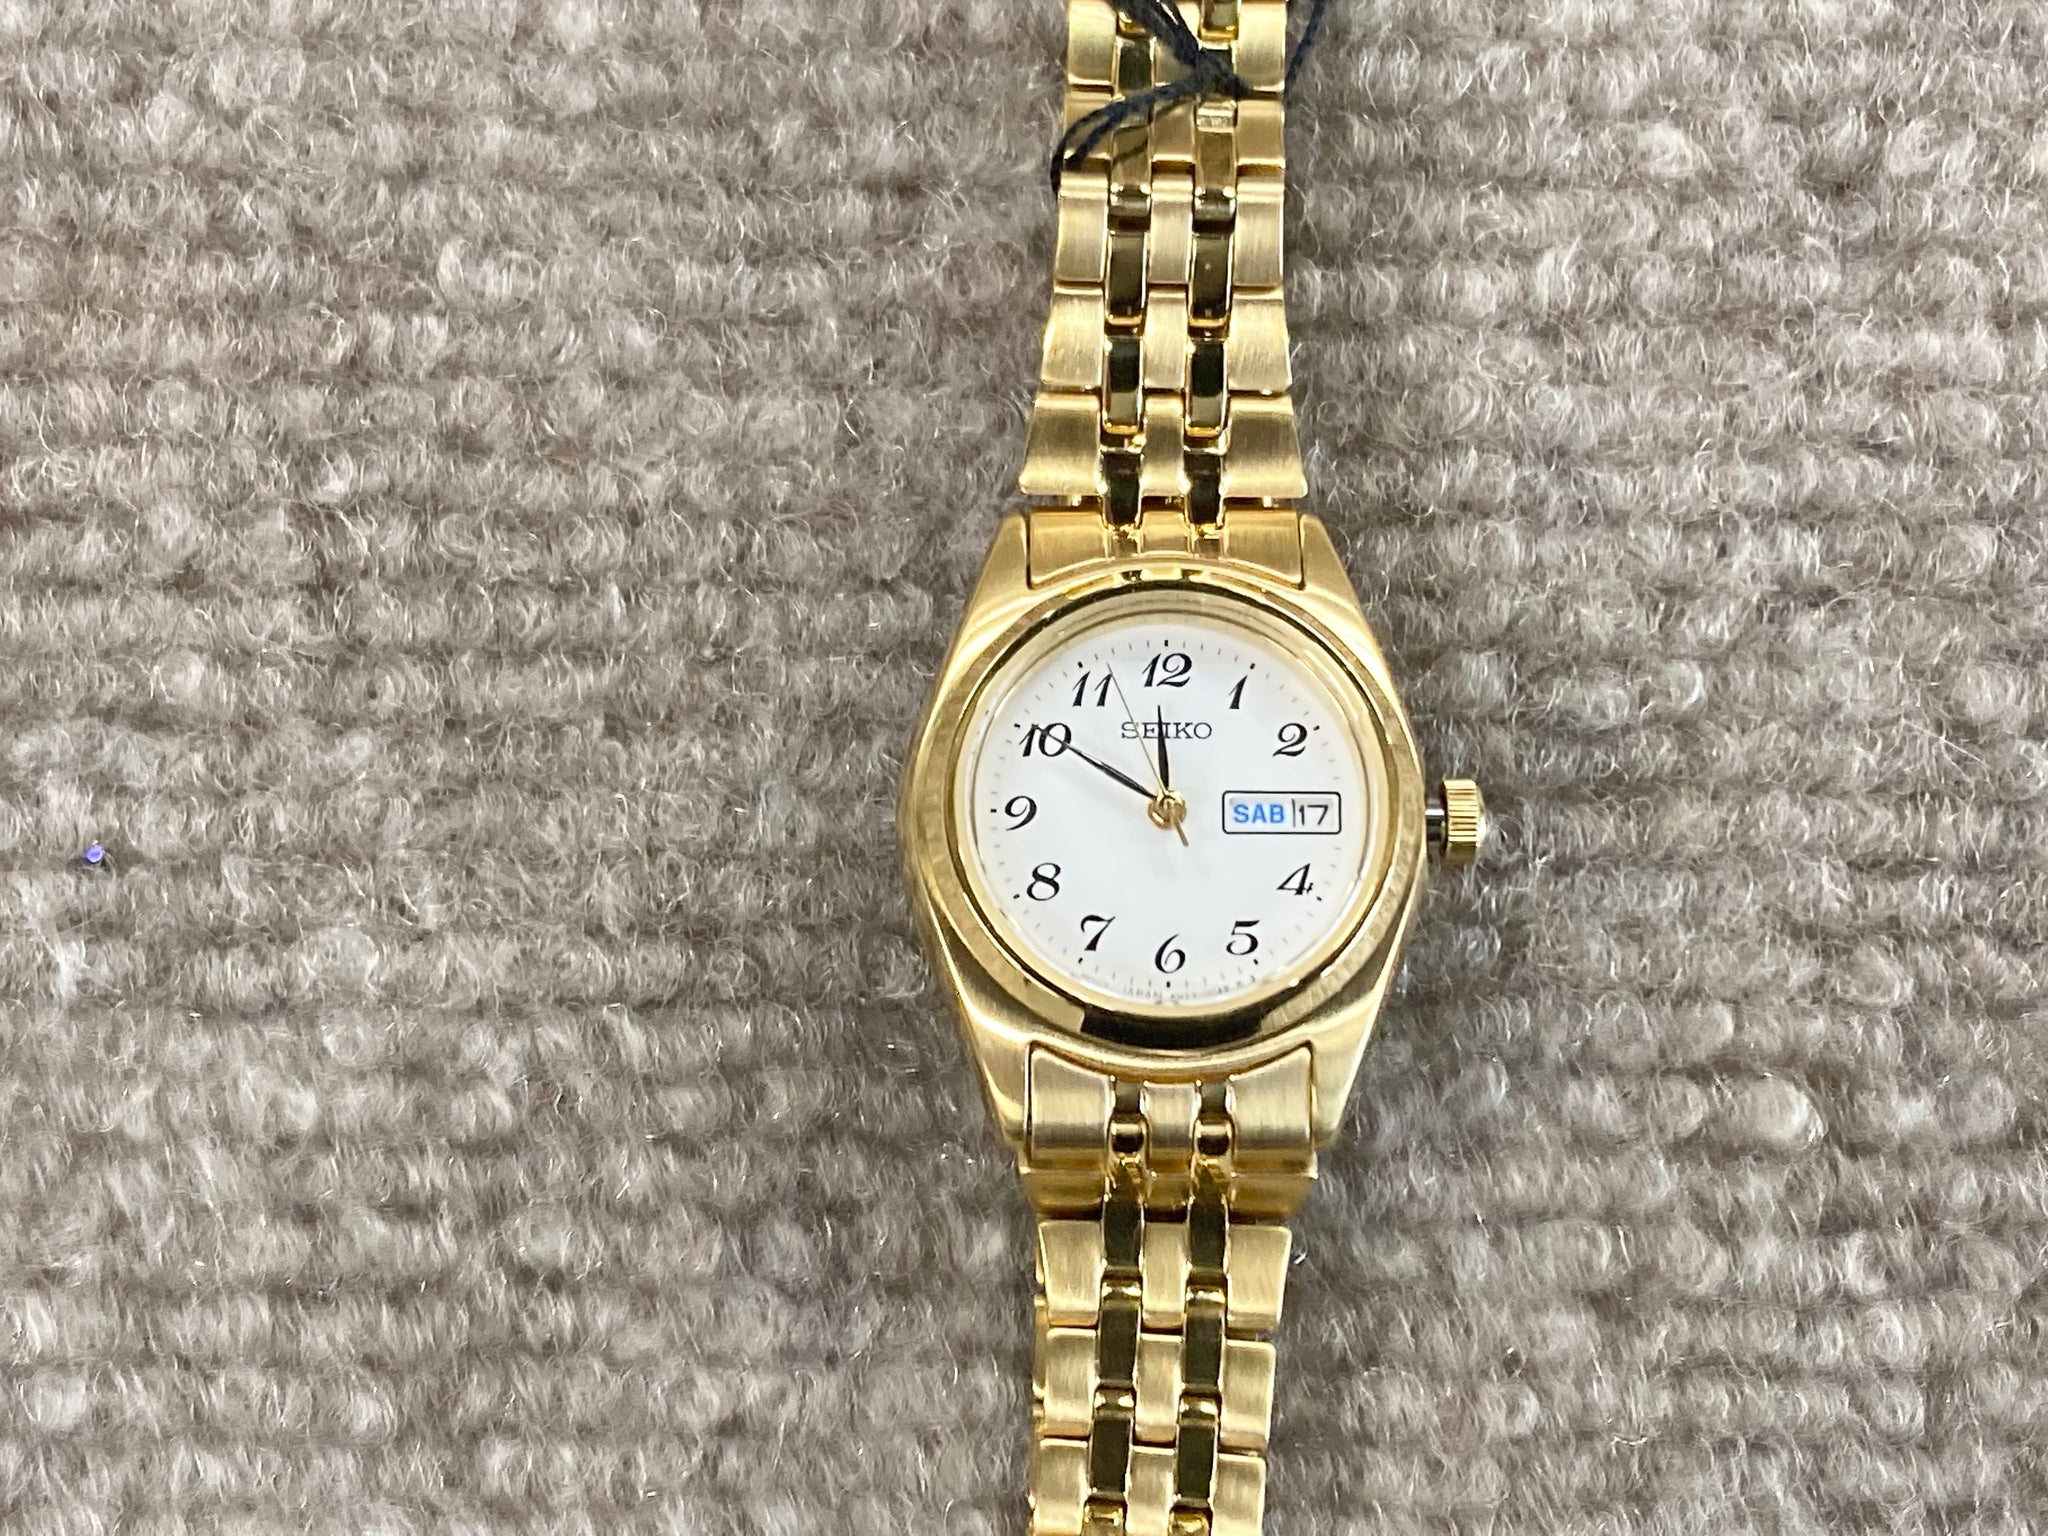 Seiko Women's Watch With Day Date Calendar – DeGrandpre Jewelers